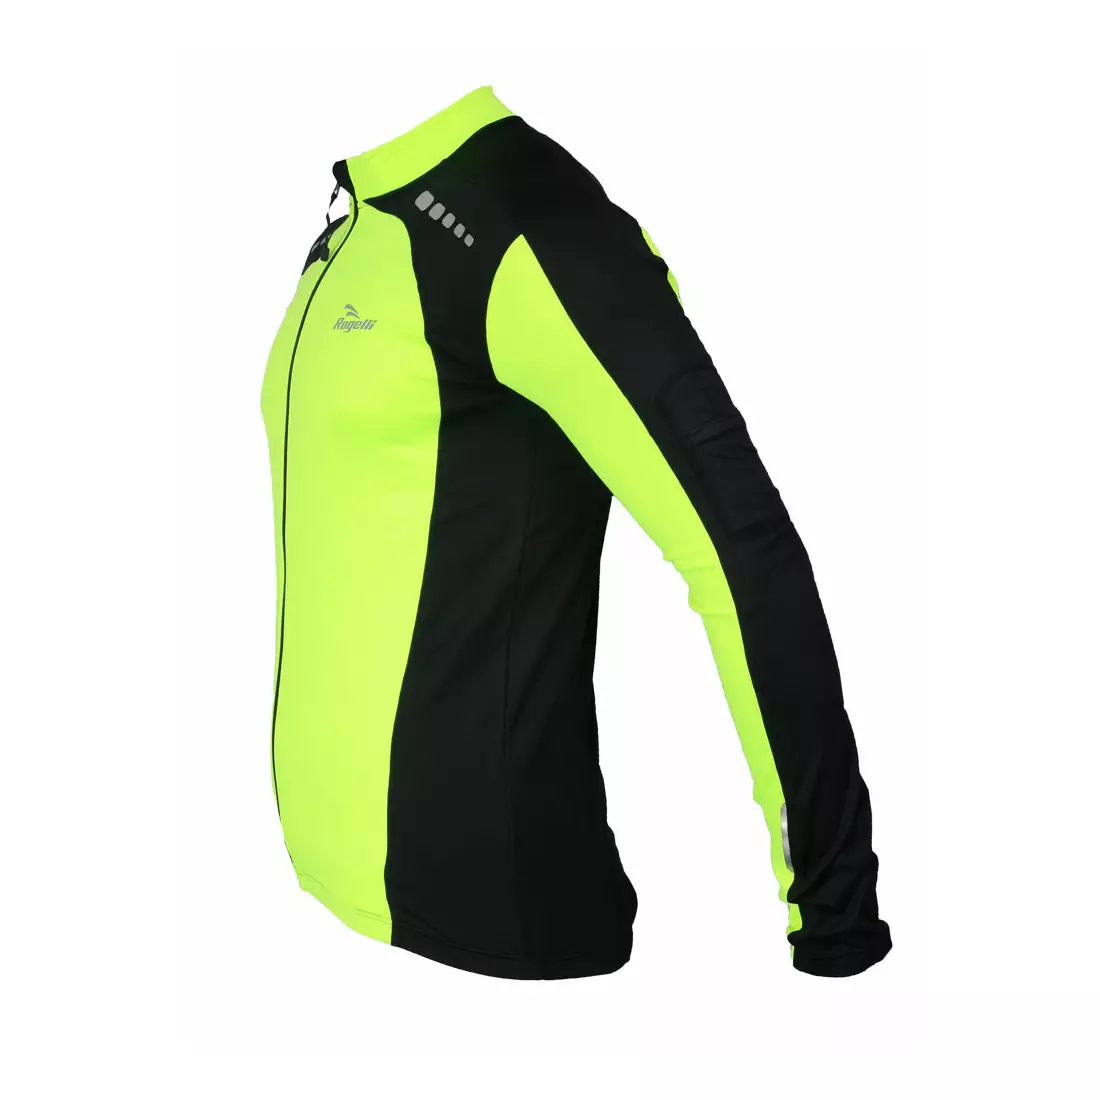 ROGELLI TREVISO - warm cycling sweatshirt, color: Fluor